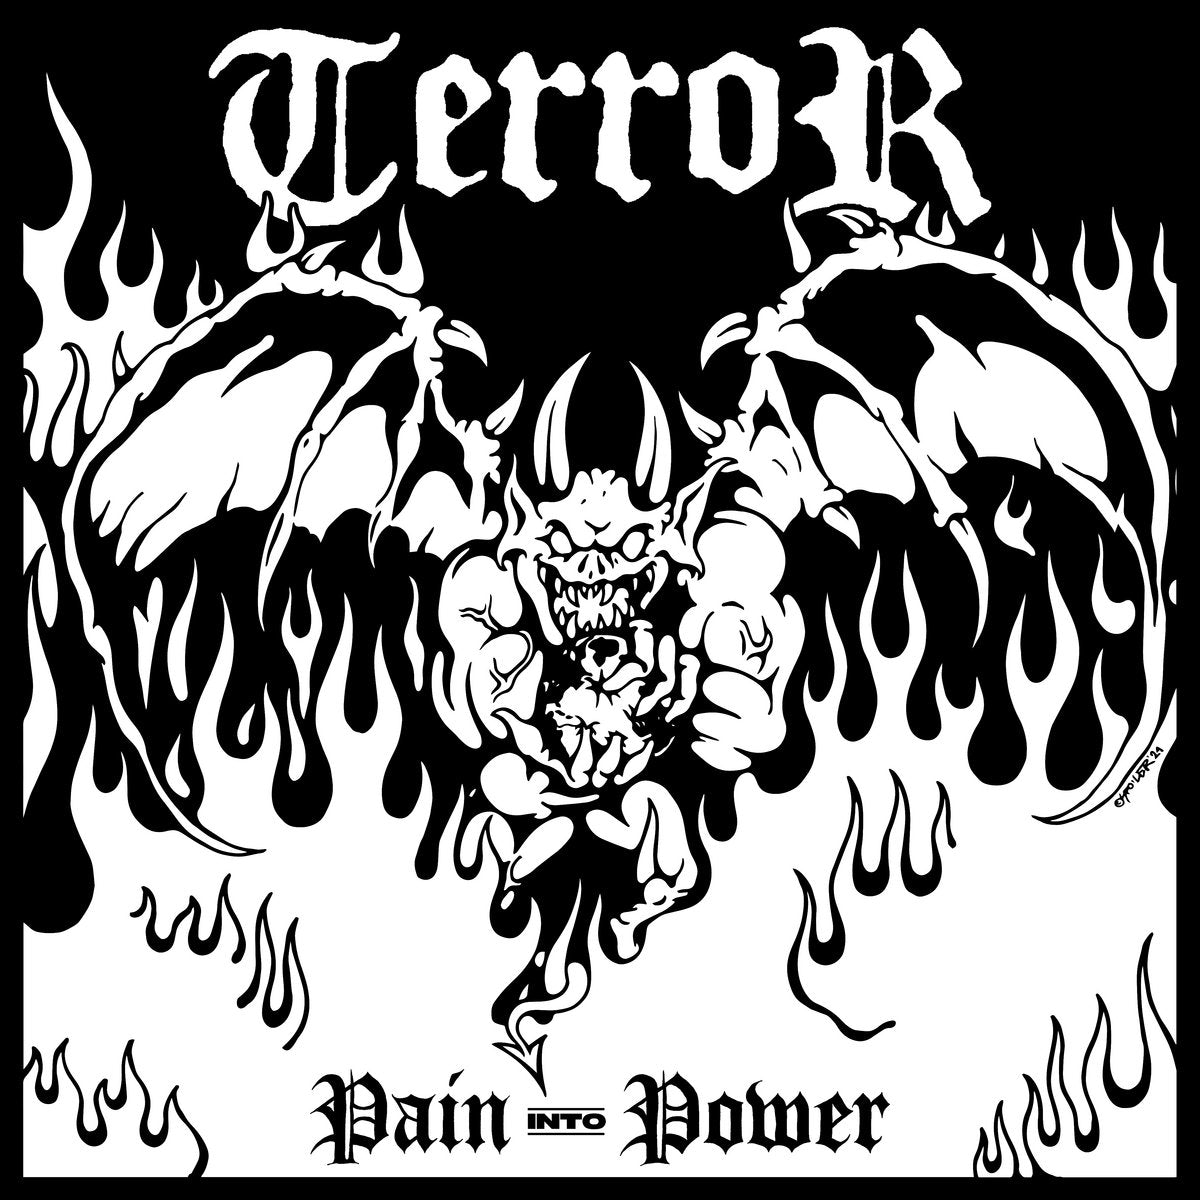 Terror "Pain Into Power" 12" Vinyl